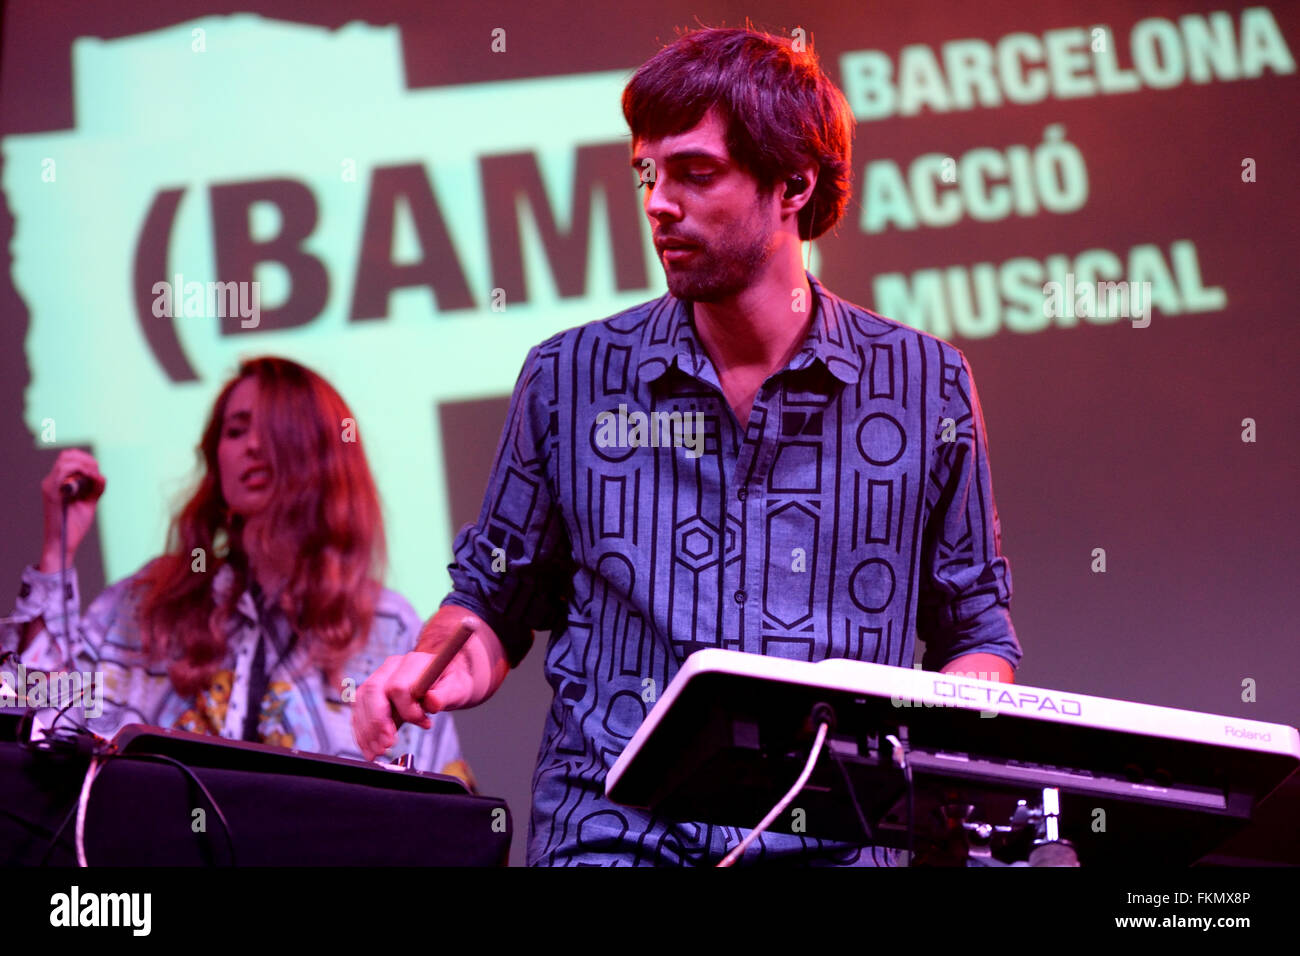 BARCELONA - SEP 19: Desert (electronic band) concert at Barcelona Accio Musical (BAM) La Merce Festival. Stock Photo